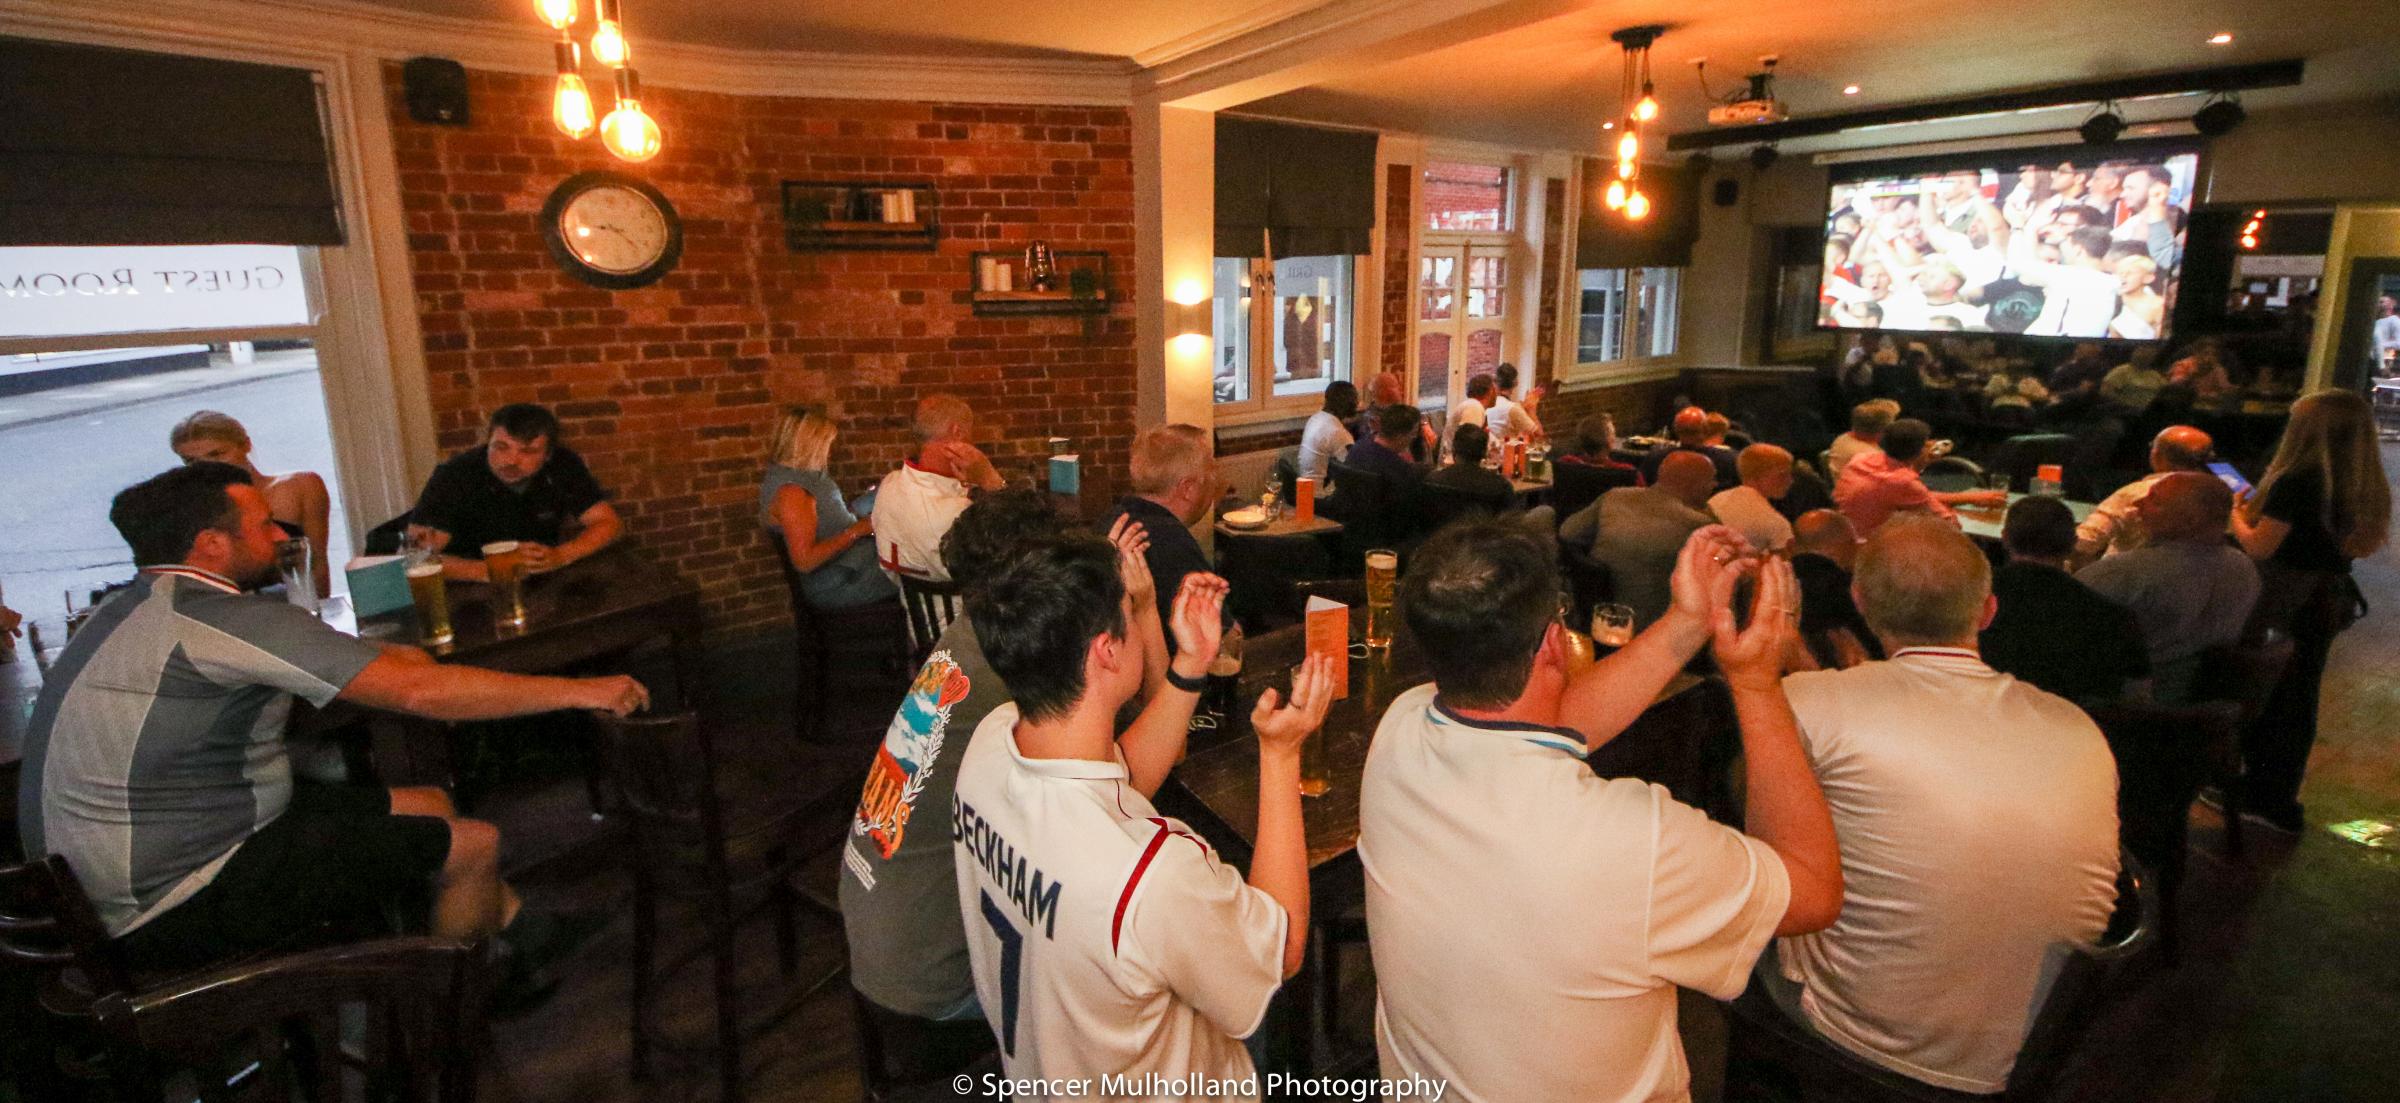 Euro 2020 final – Salisbury pubs showing England vs Italy